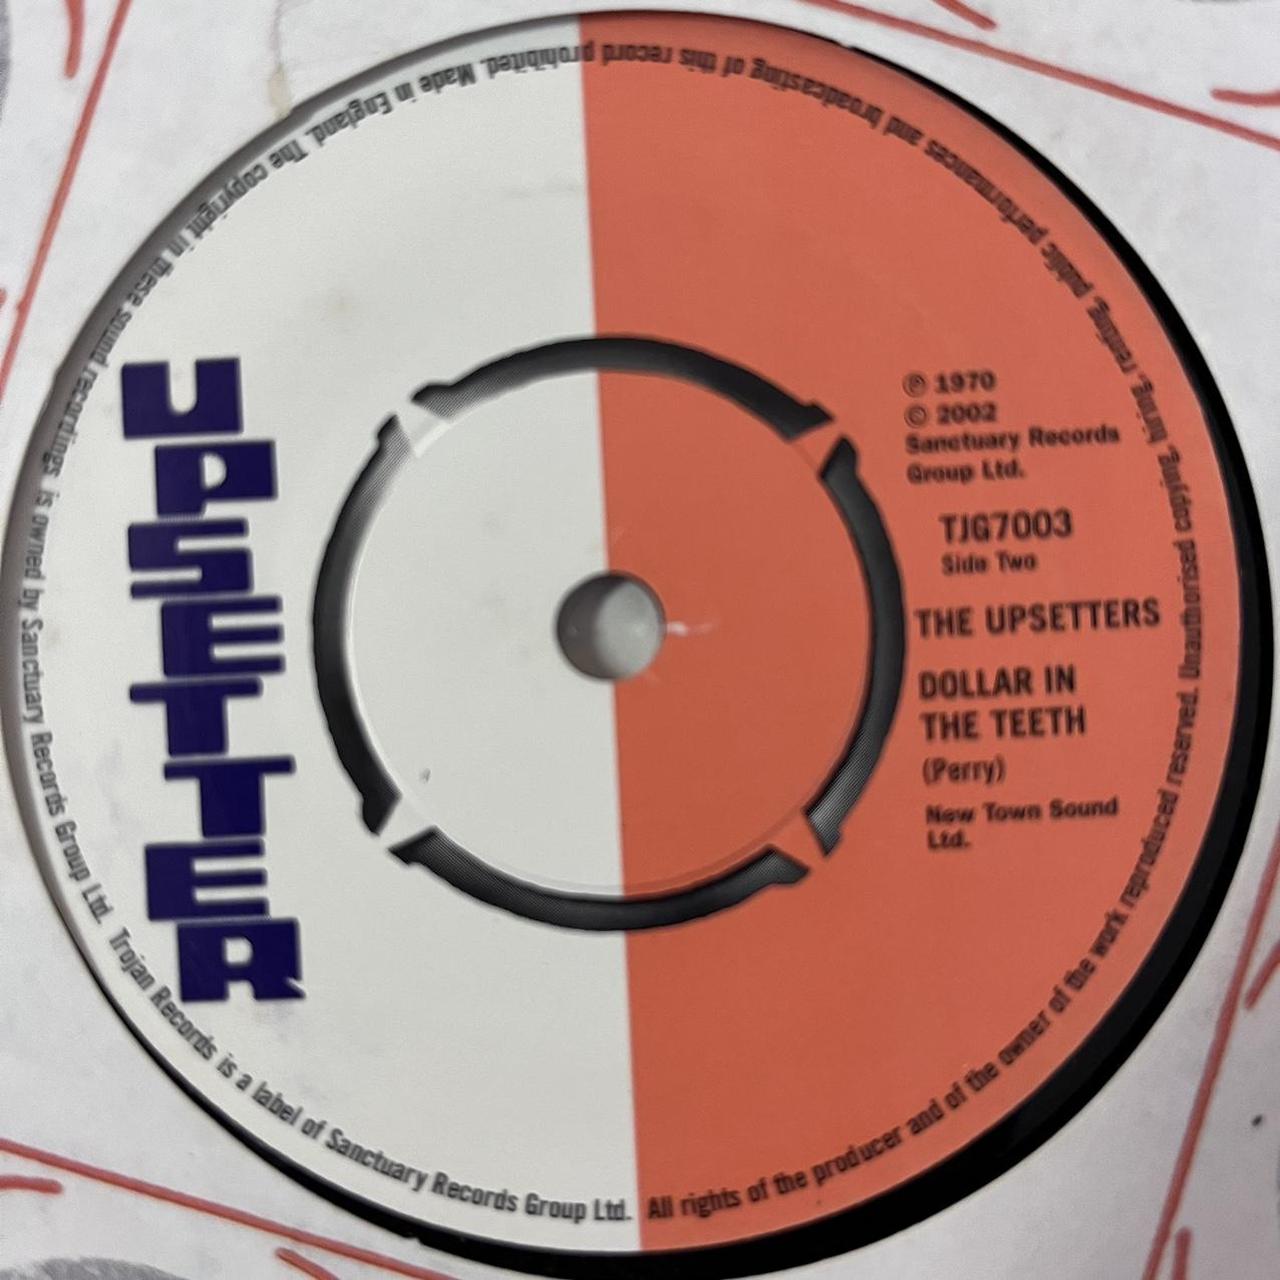 The Upsetters “Return of Django” / “Dollar in Teeth 7inch vinyl